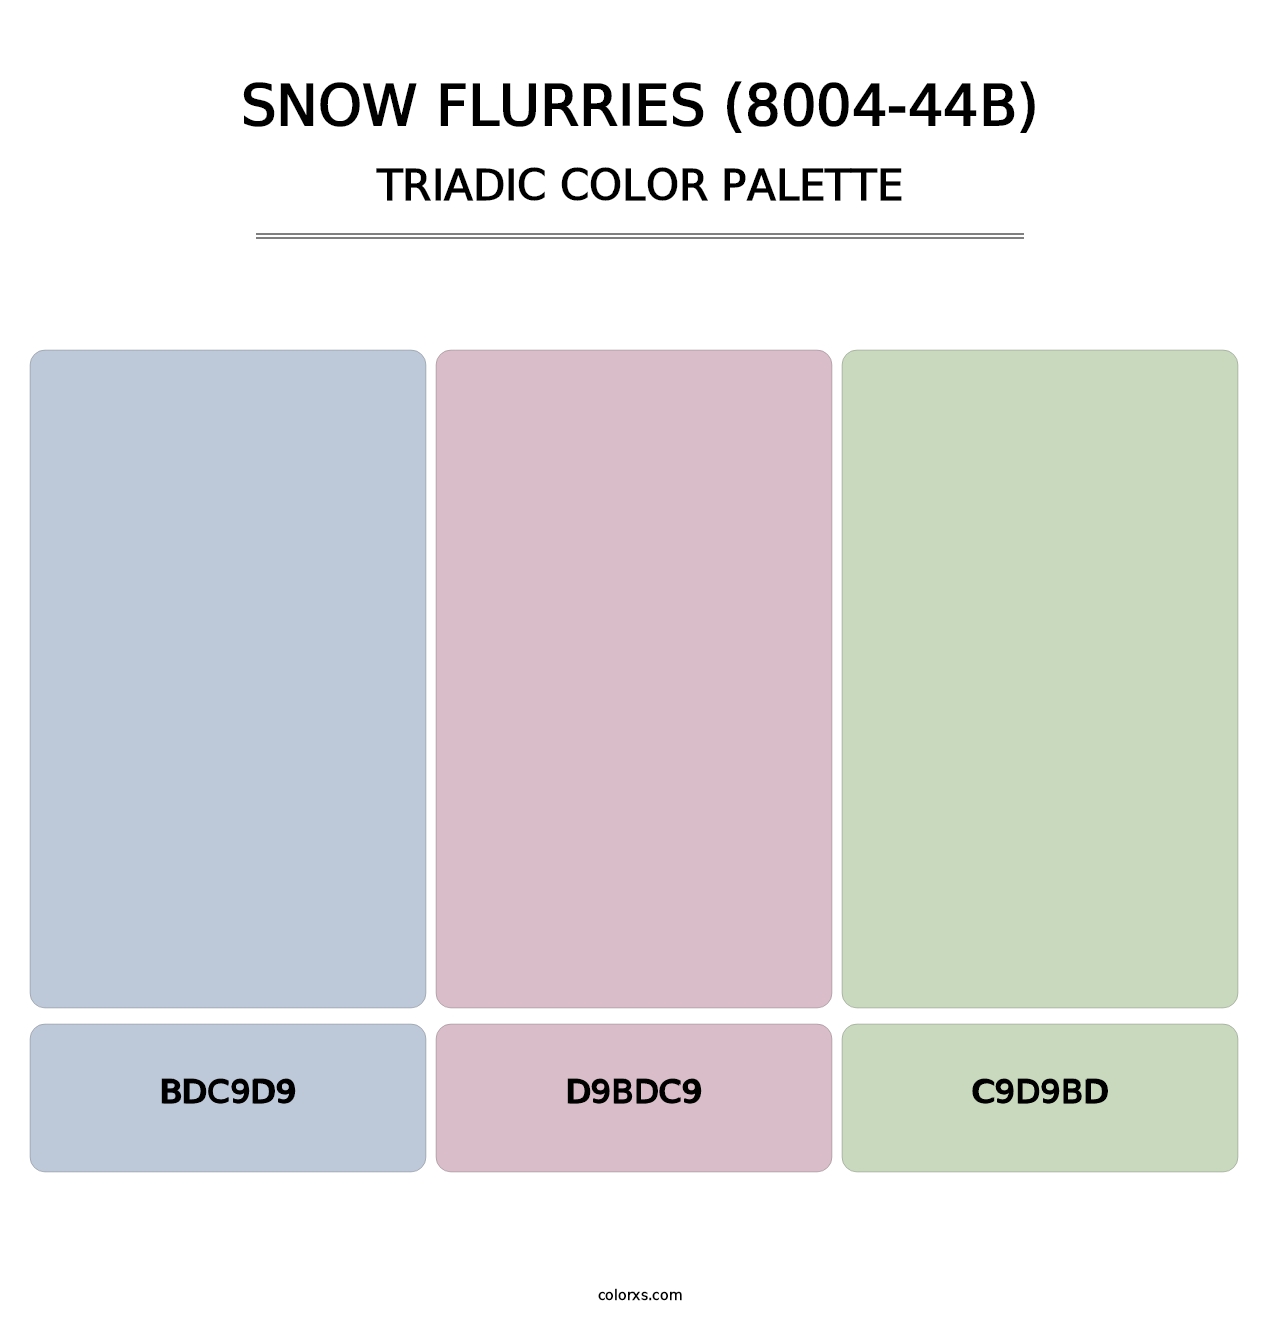 Snow Flurries (8004-44B) - Triadic Color Palette